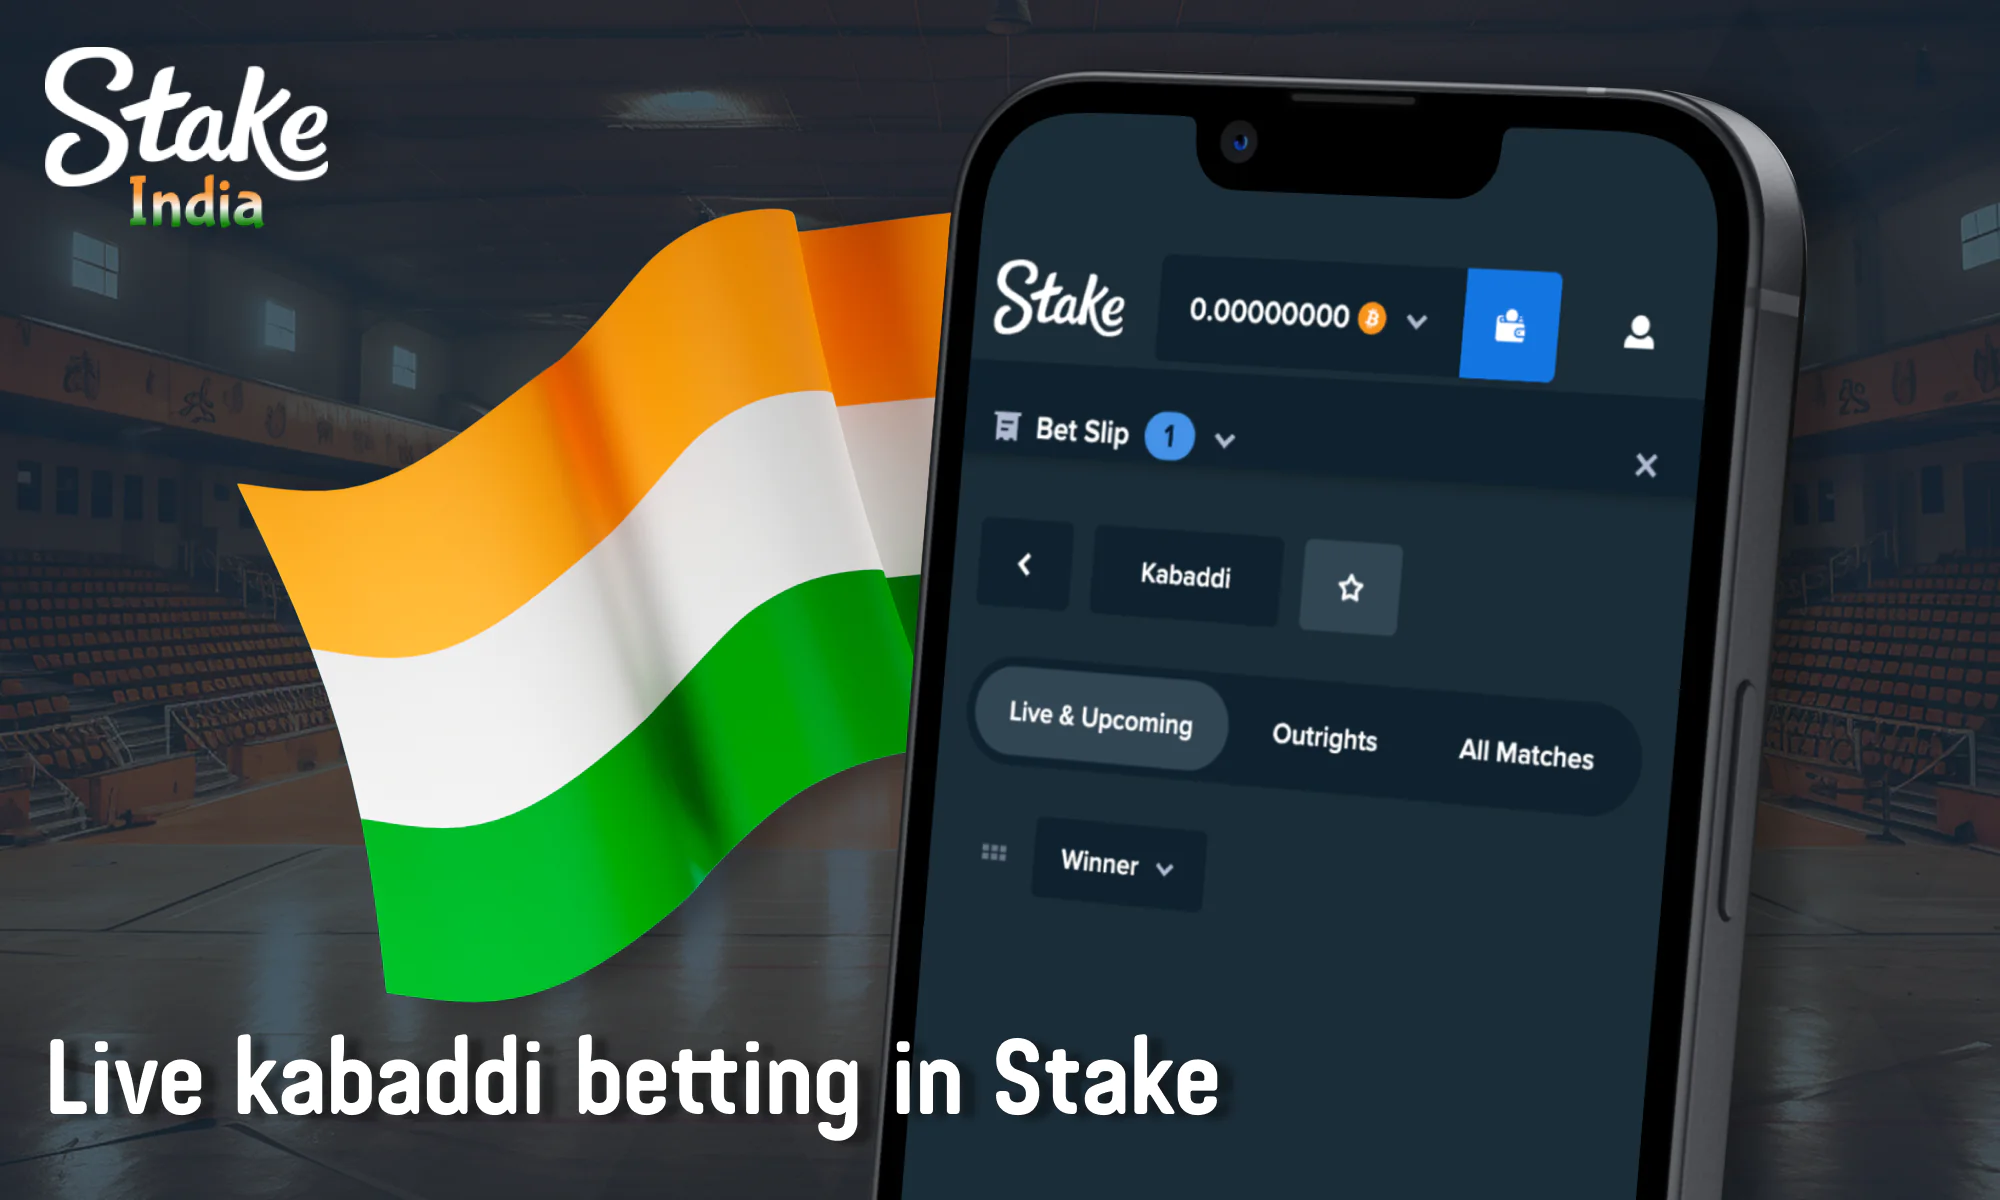 Live betting on Kabaddi - Stake India